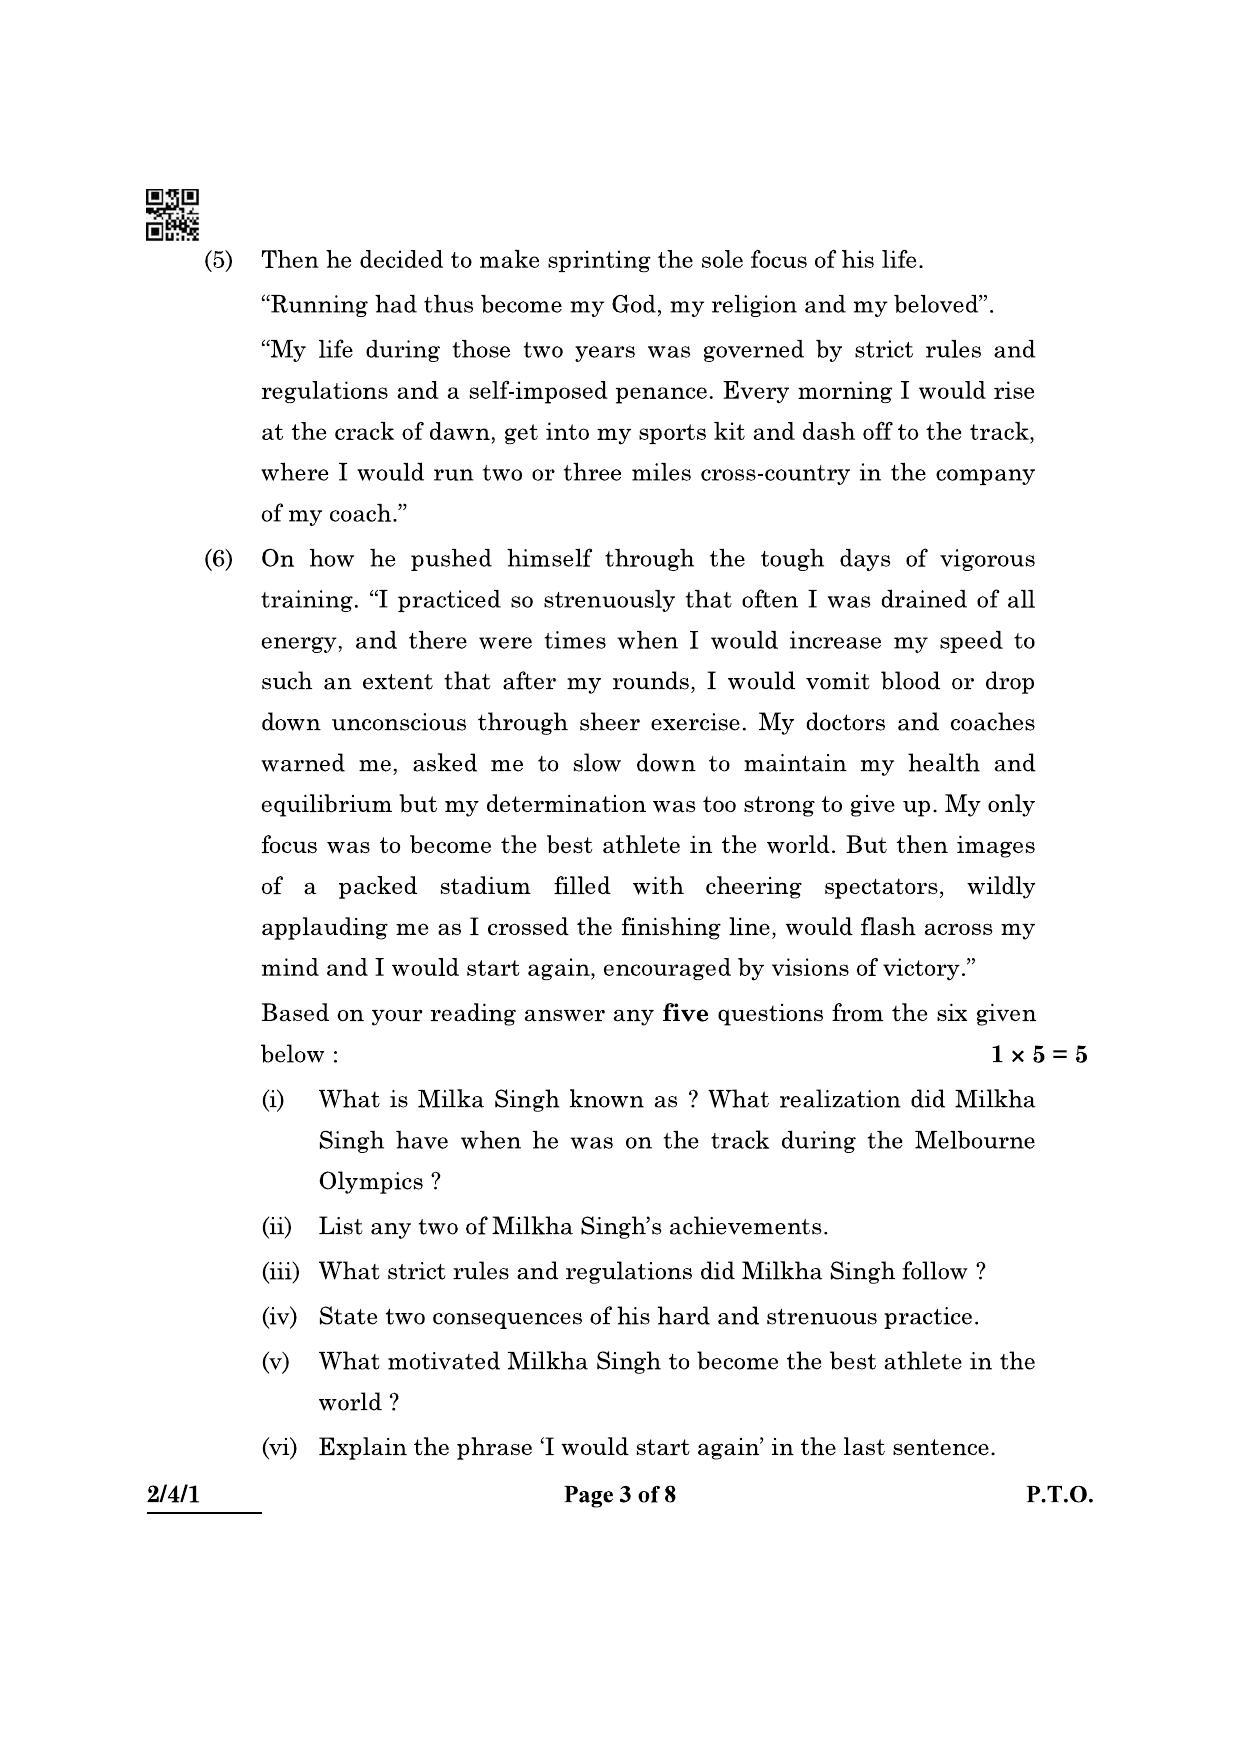 CBSE Class 10 2-4-1 (English L & L) 2022 Question Paper - Page 3